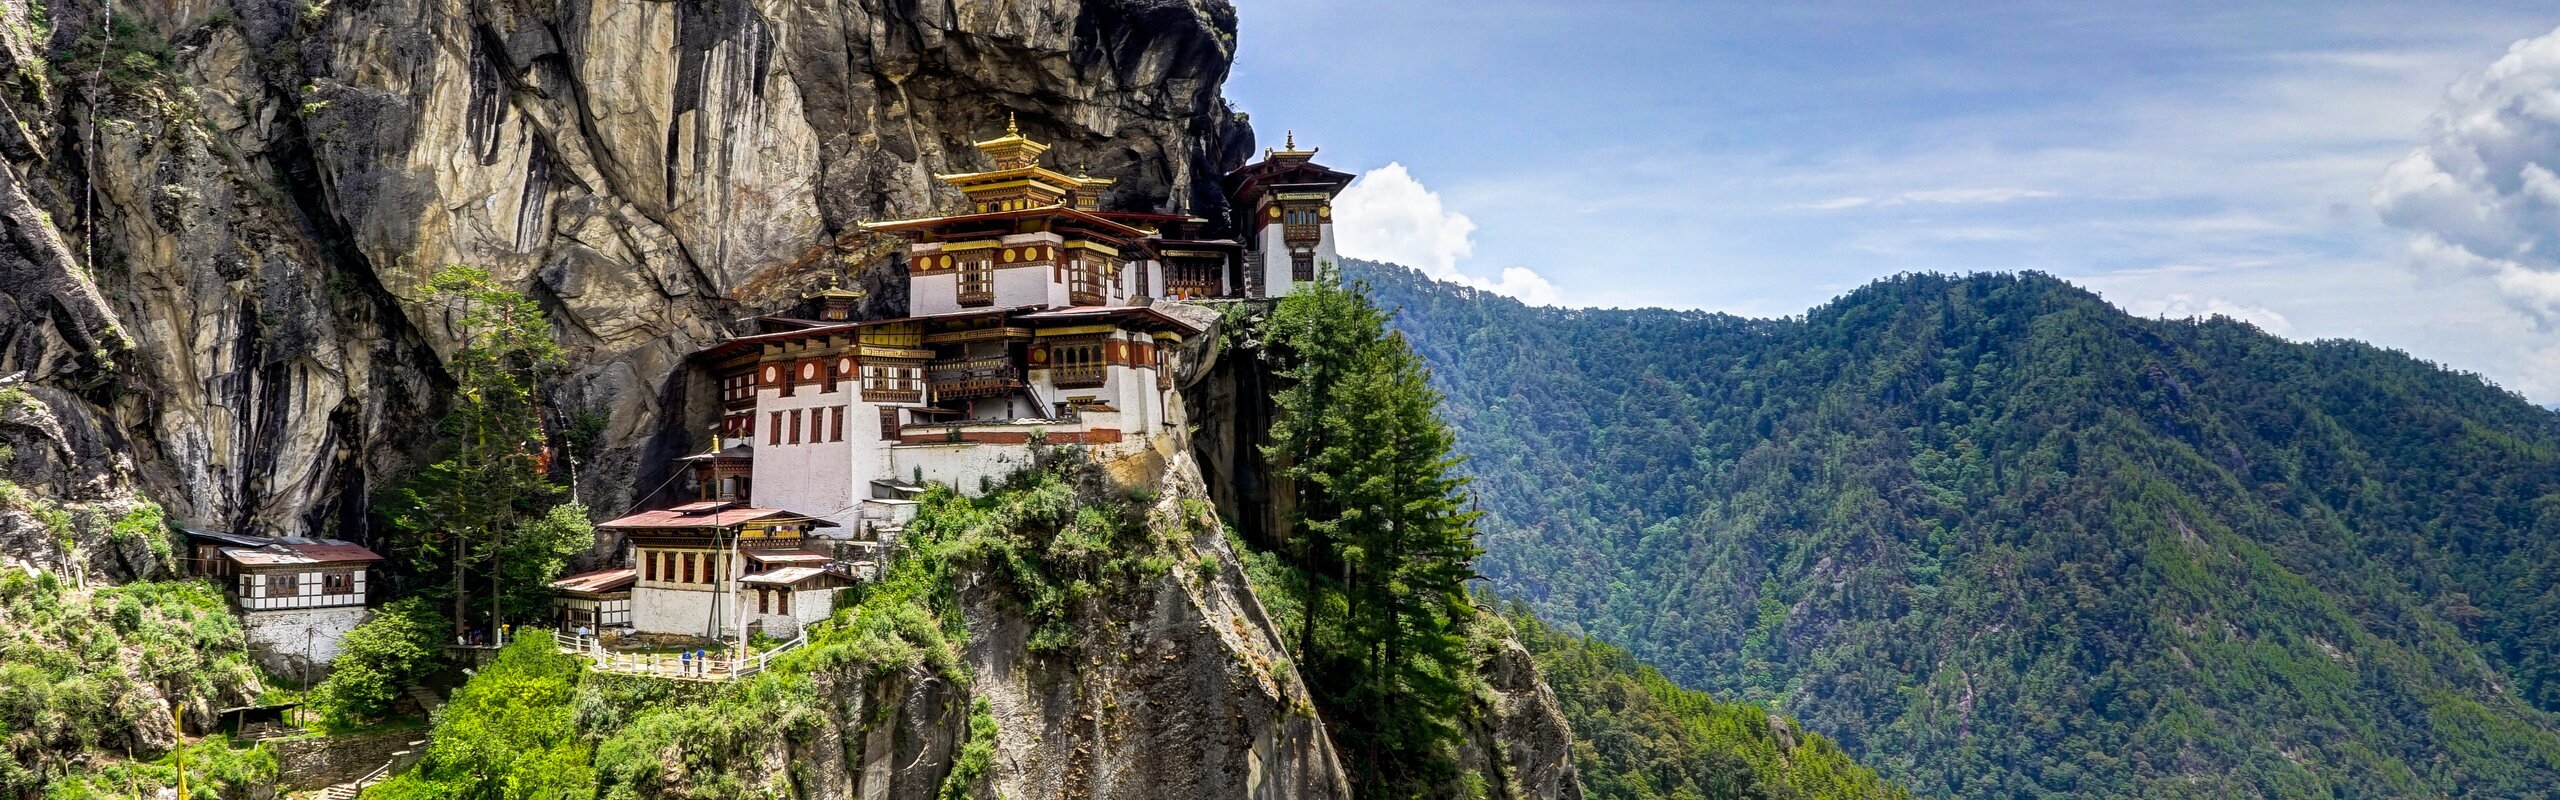 21-Day India, Nepal and Bhutan Tour